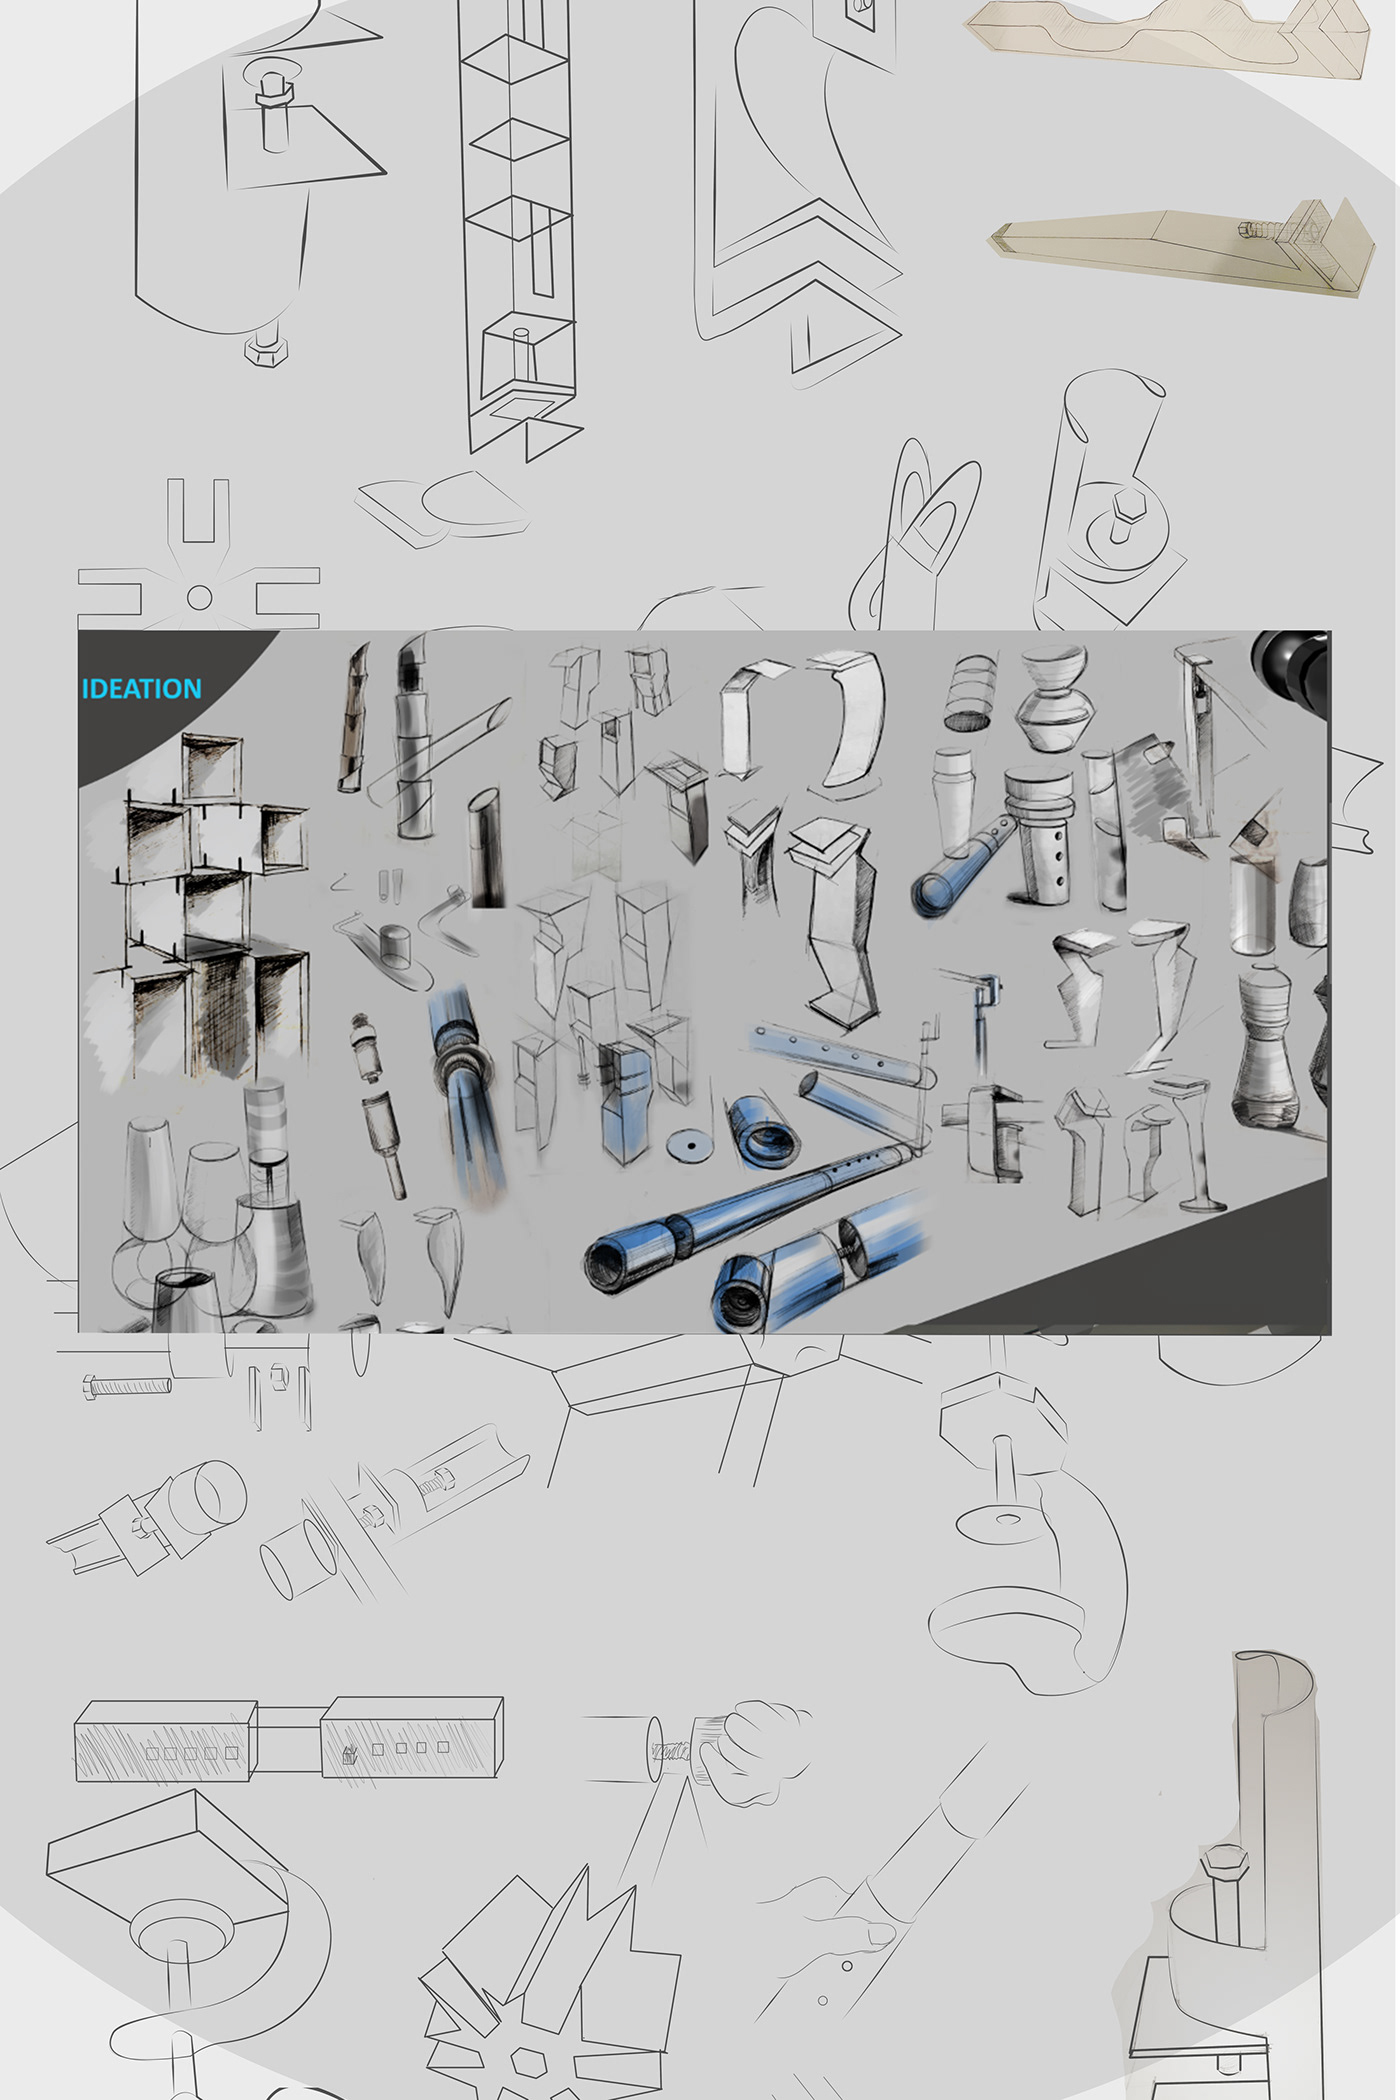 modular product design industrial furniture legs mechanism Porductdesign studentdesign Project